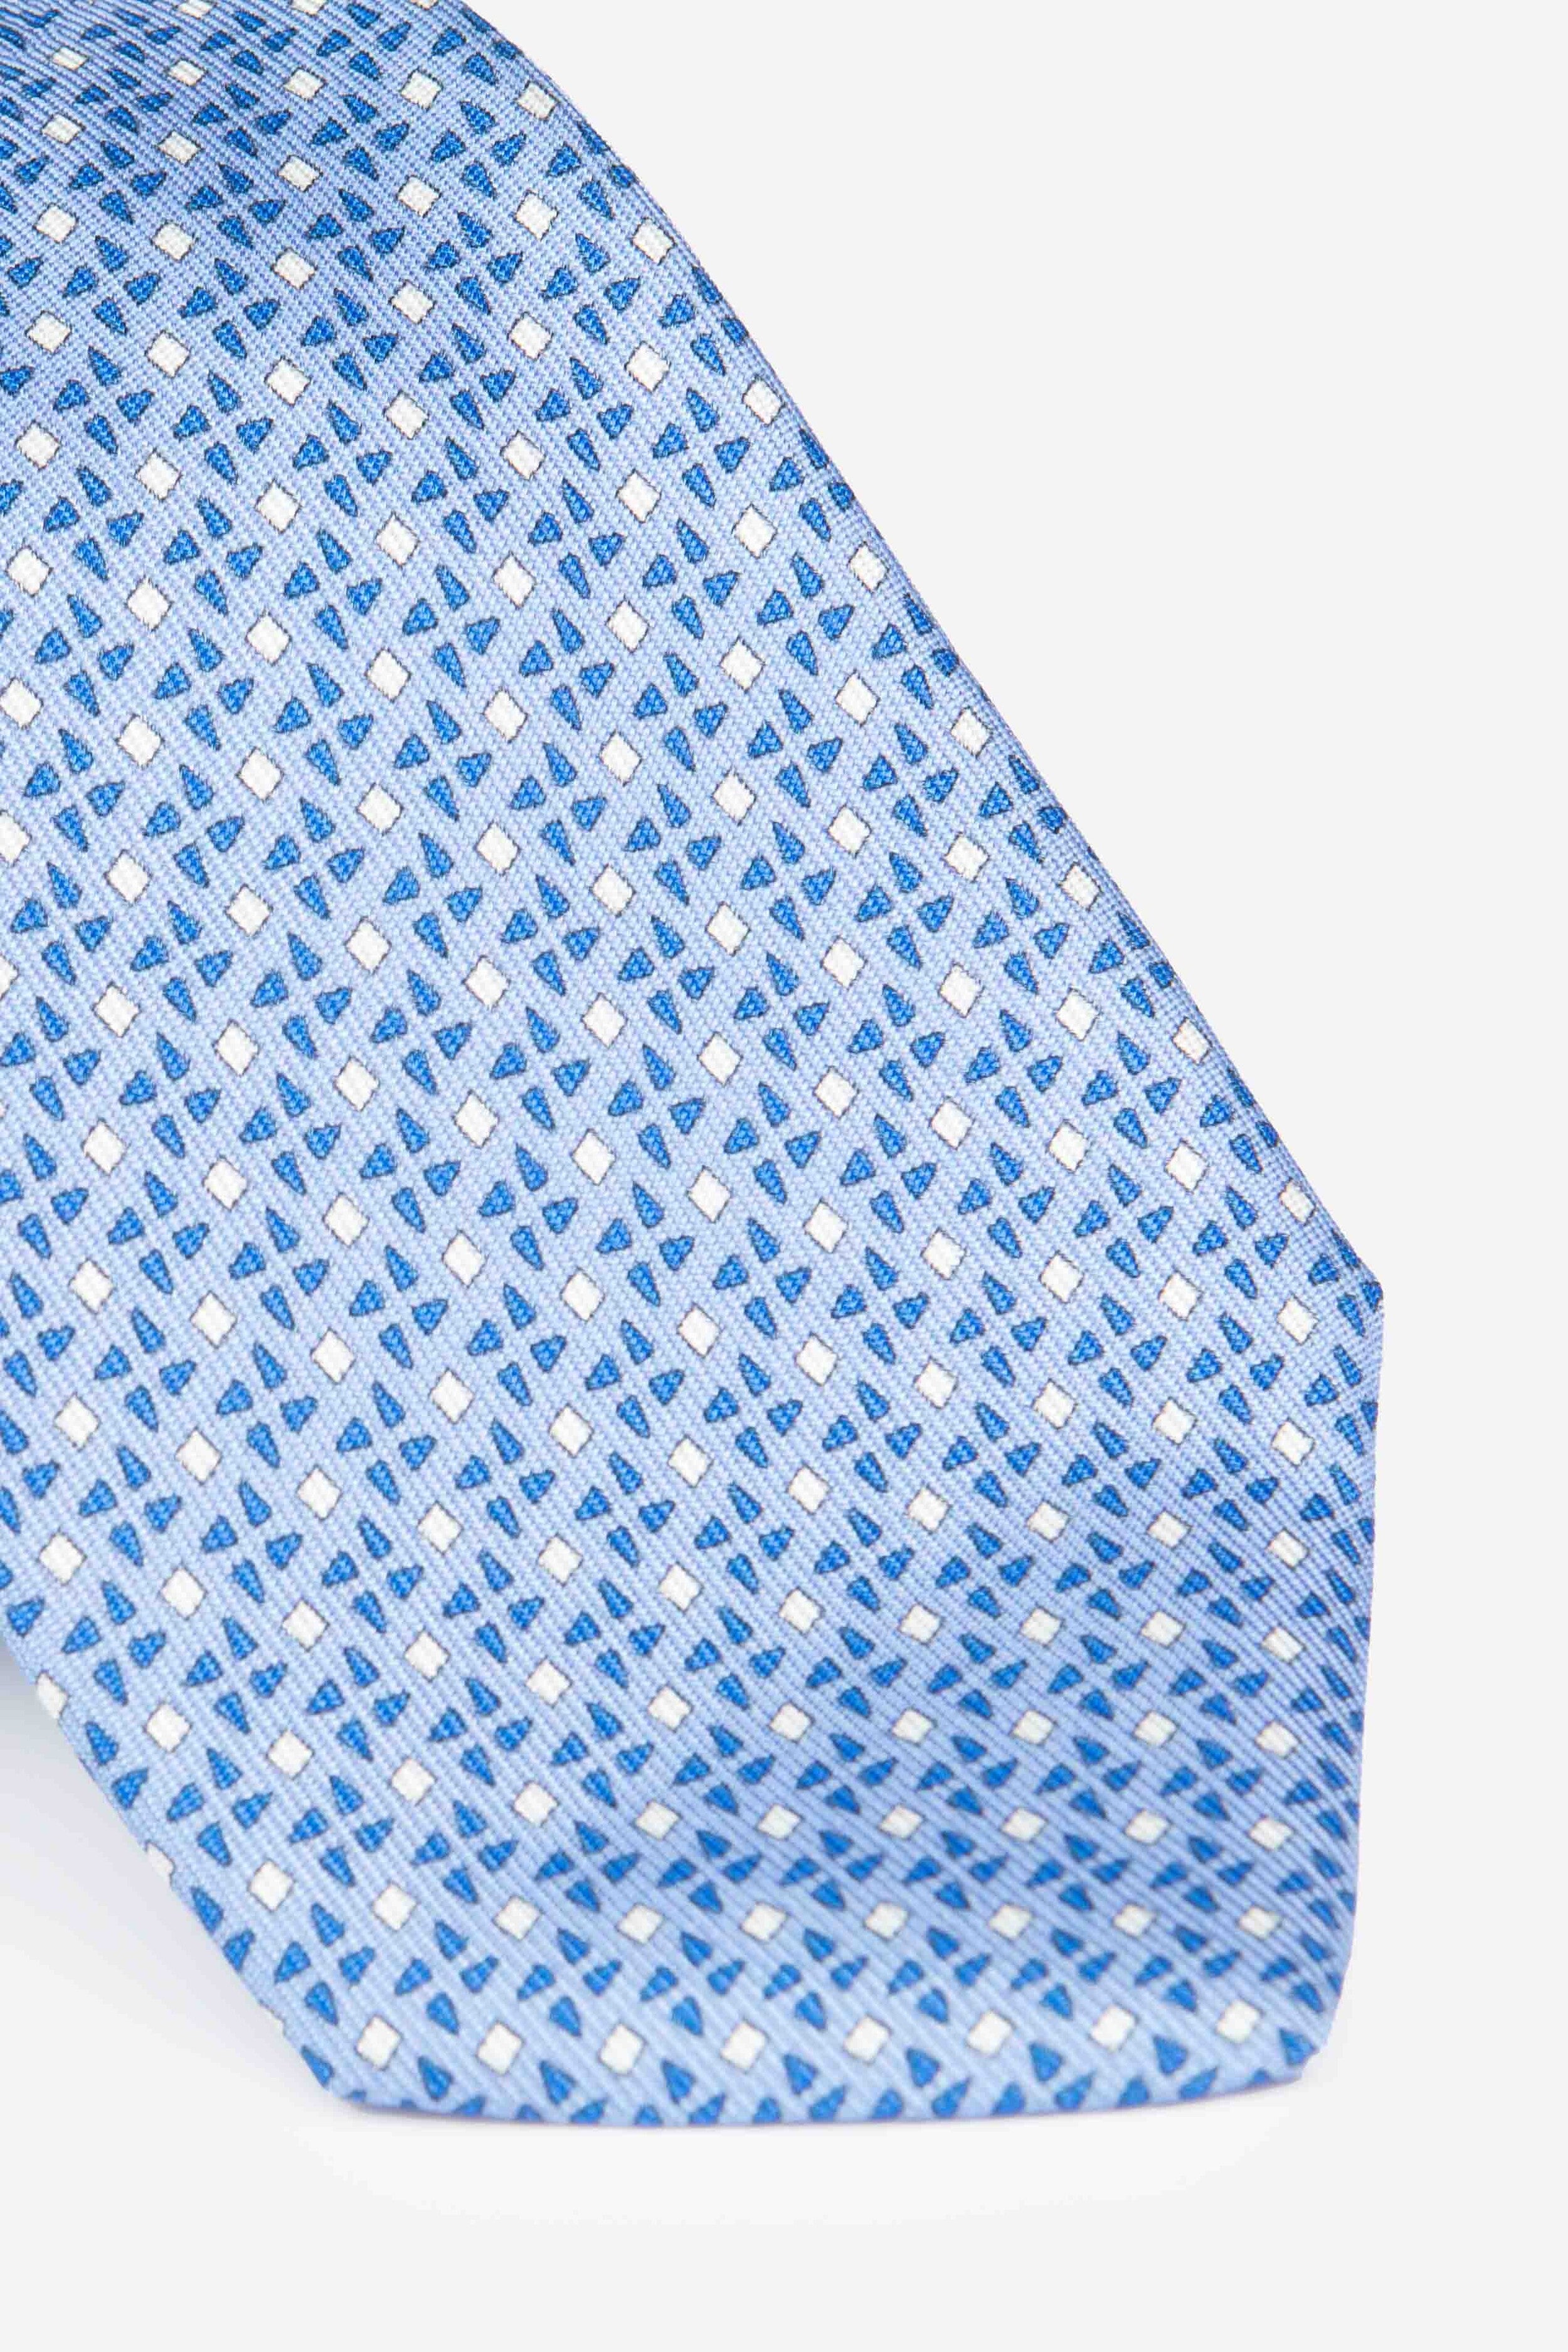 Silk patterned tie - LIGHT BLUE MICRO-EFFECT